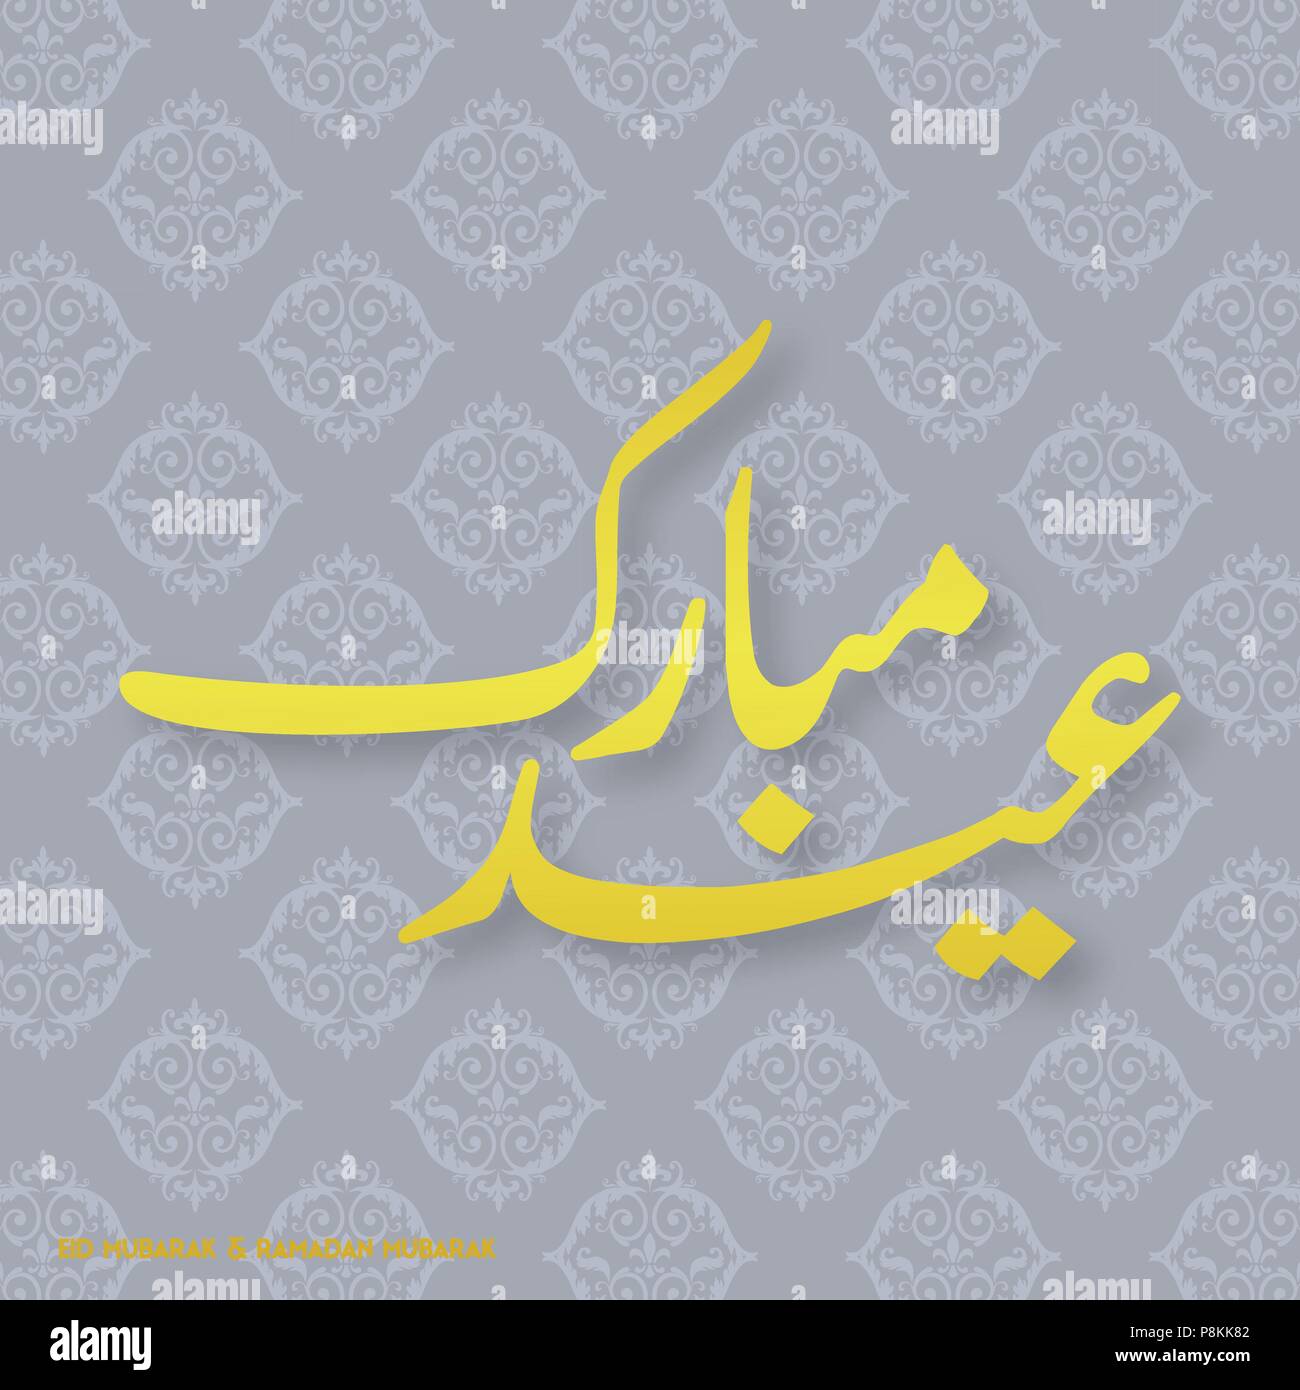 Eid Mubarak Arabic Urdu Calligraphy In Gold Stock Vector Image Art Alamy